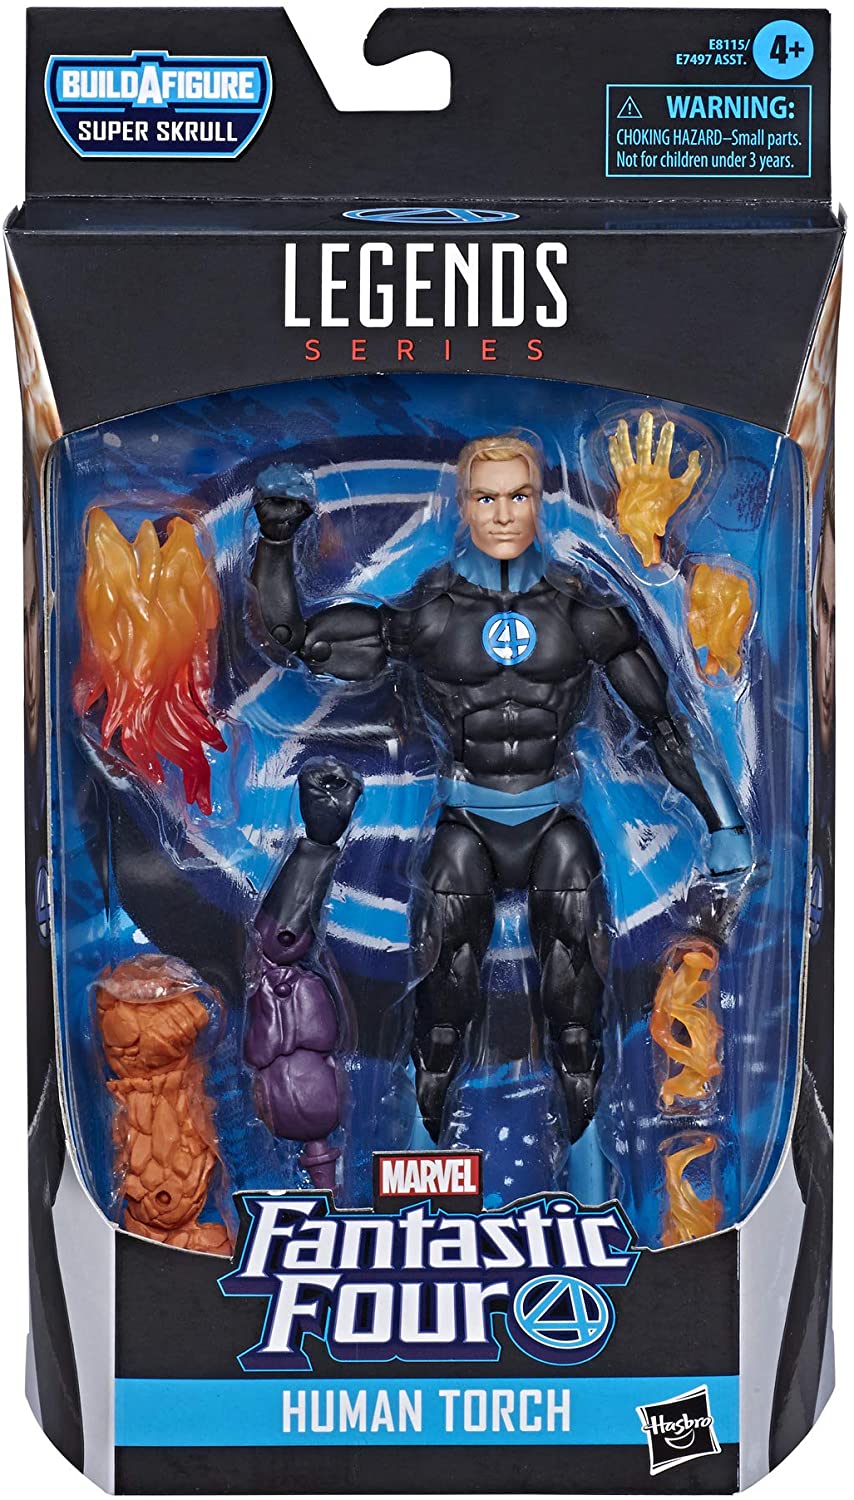 Hasbro Marvel Legends Series Fantastic Four - Human Torch Action Figure